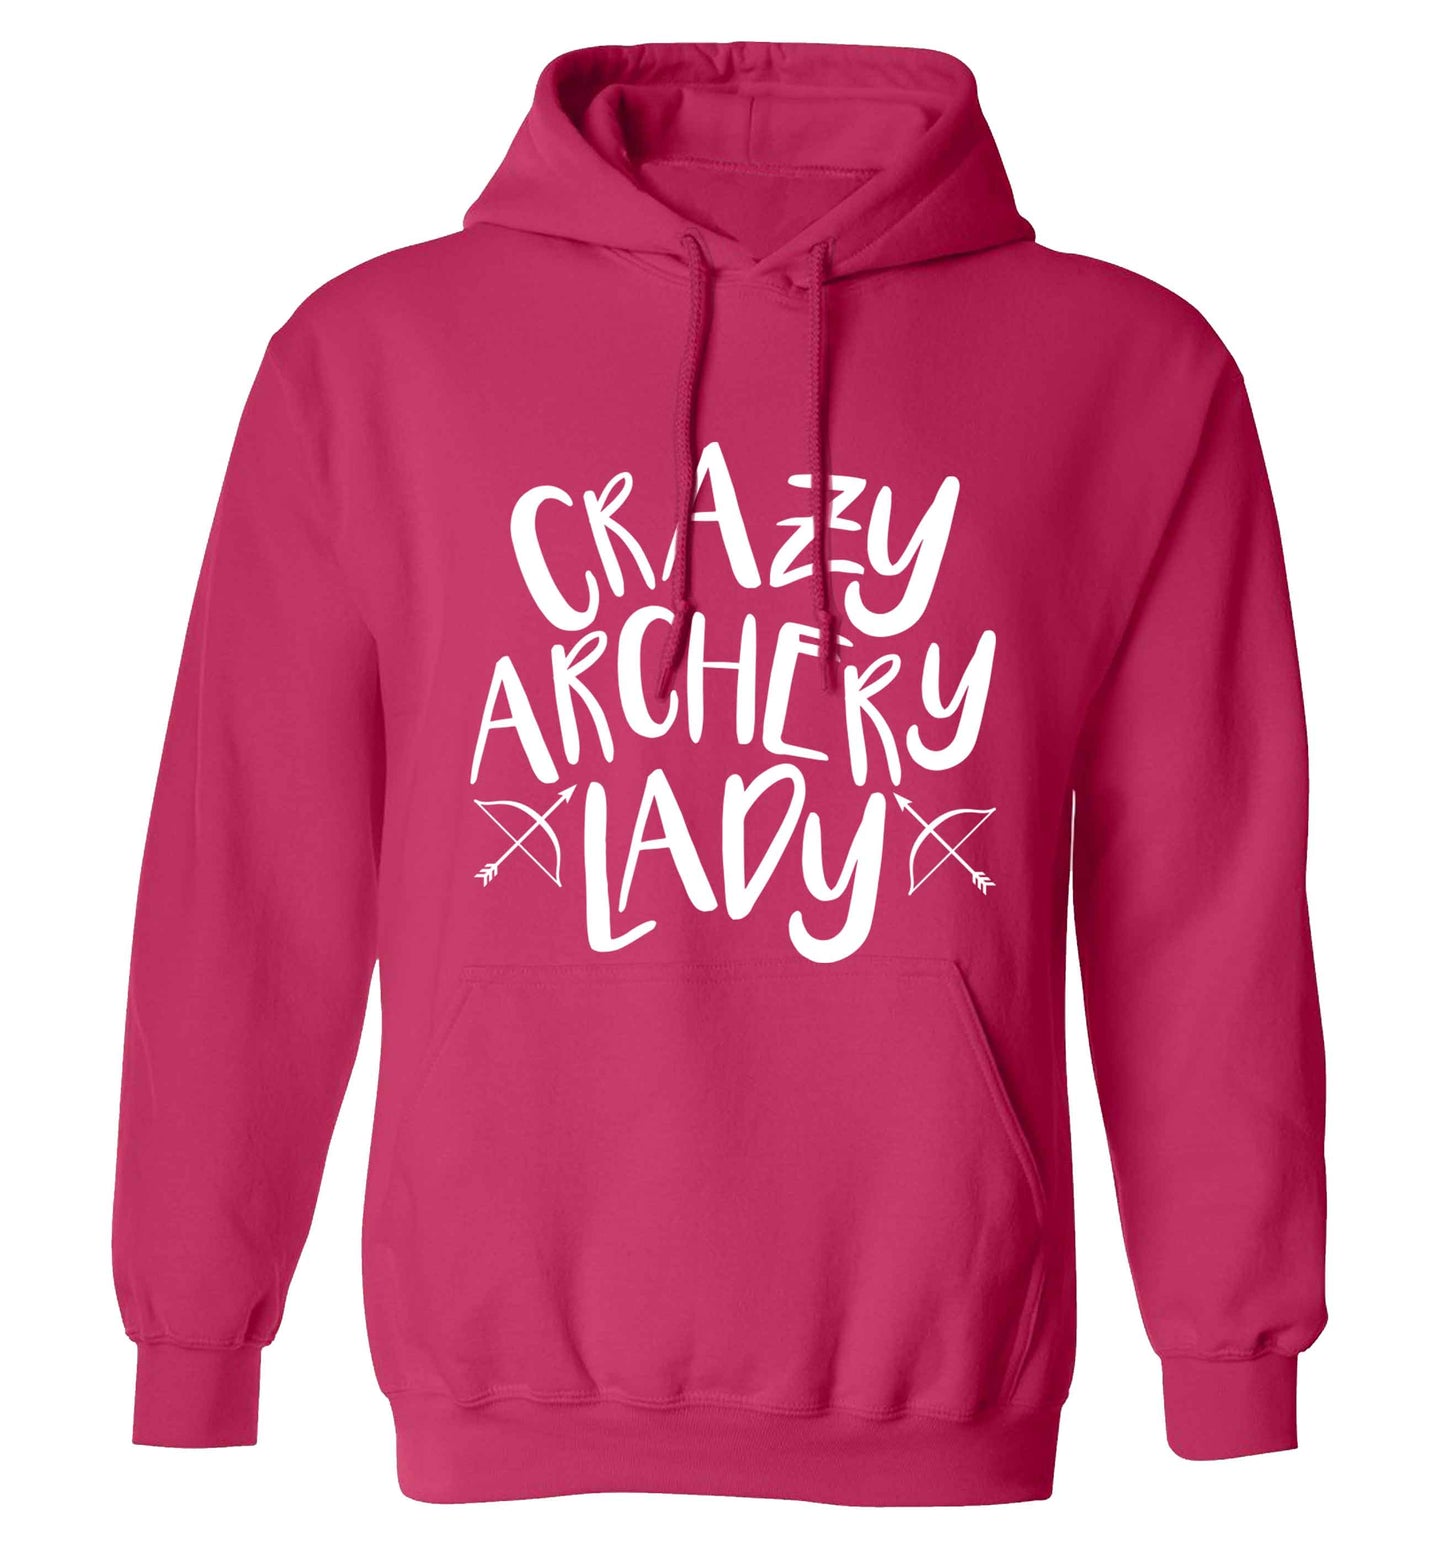 Crazy archery lady adults unisex pink hoodie 2XL